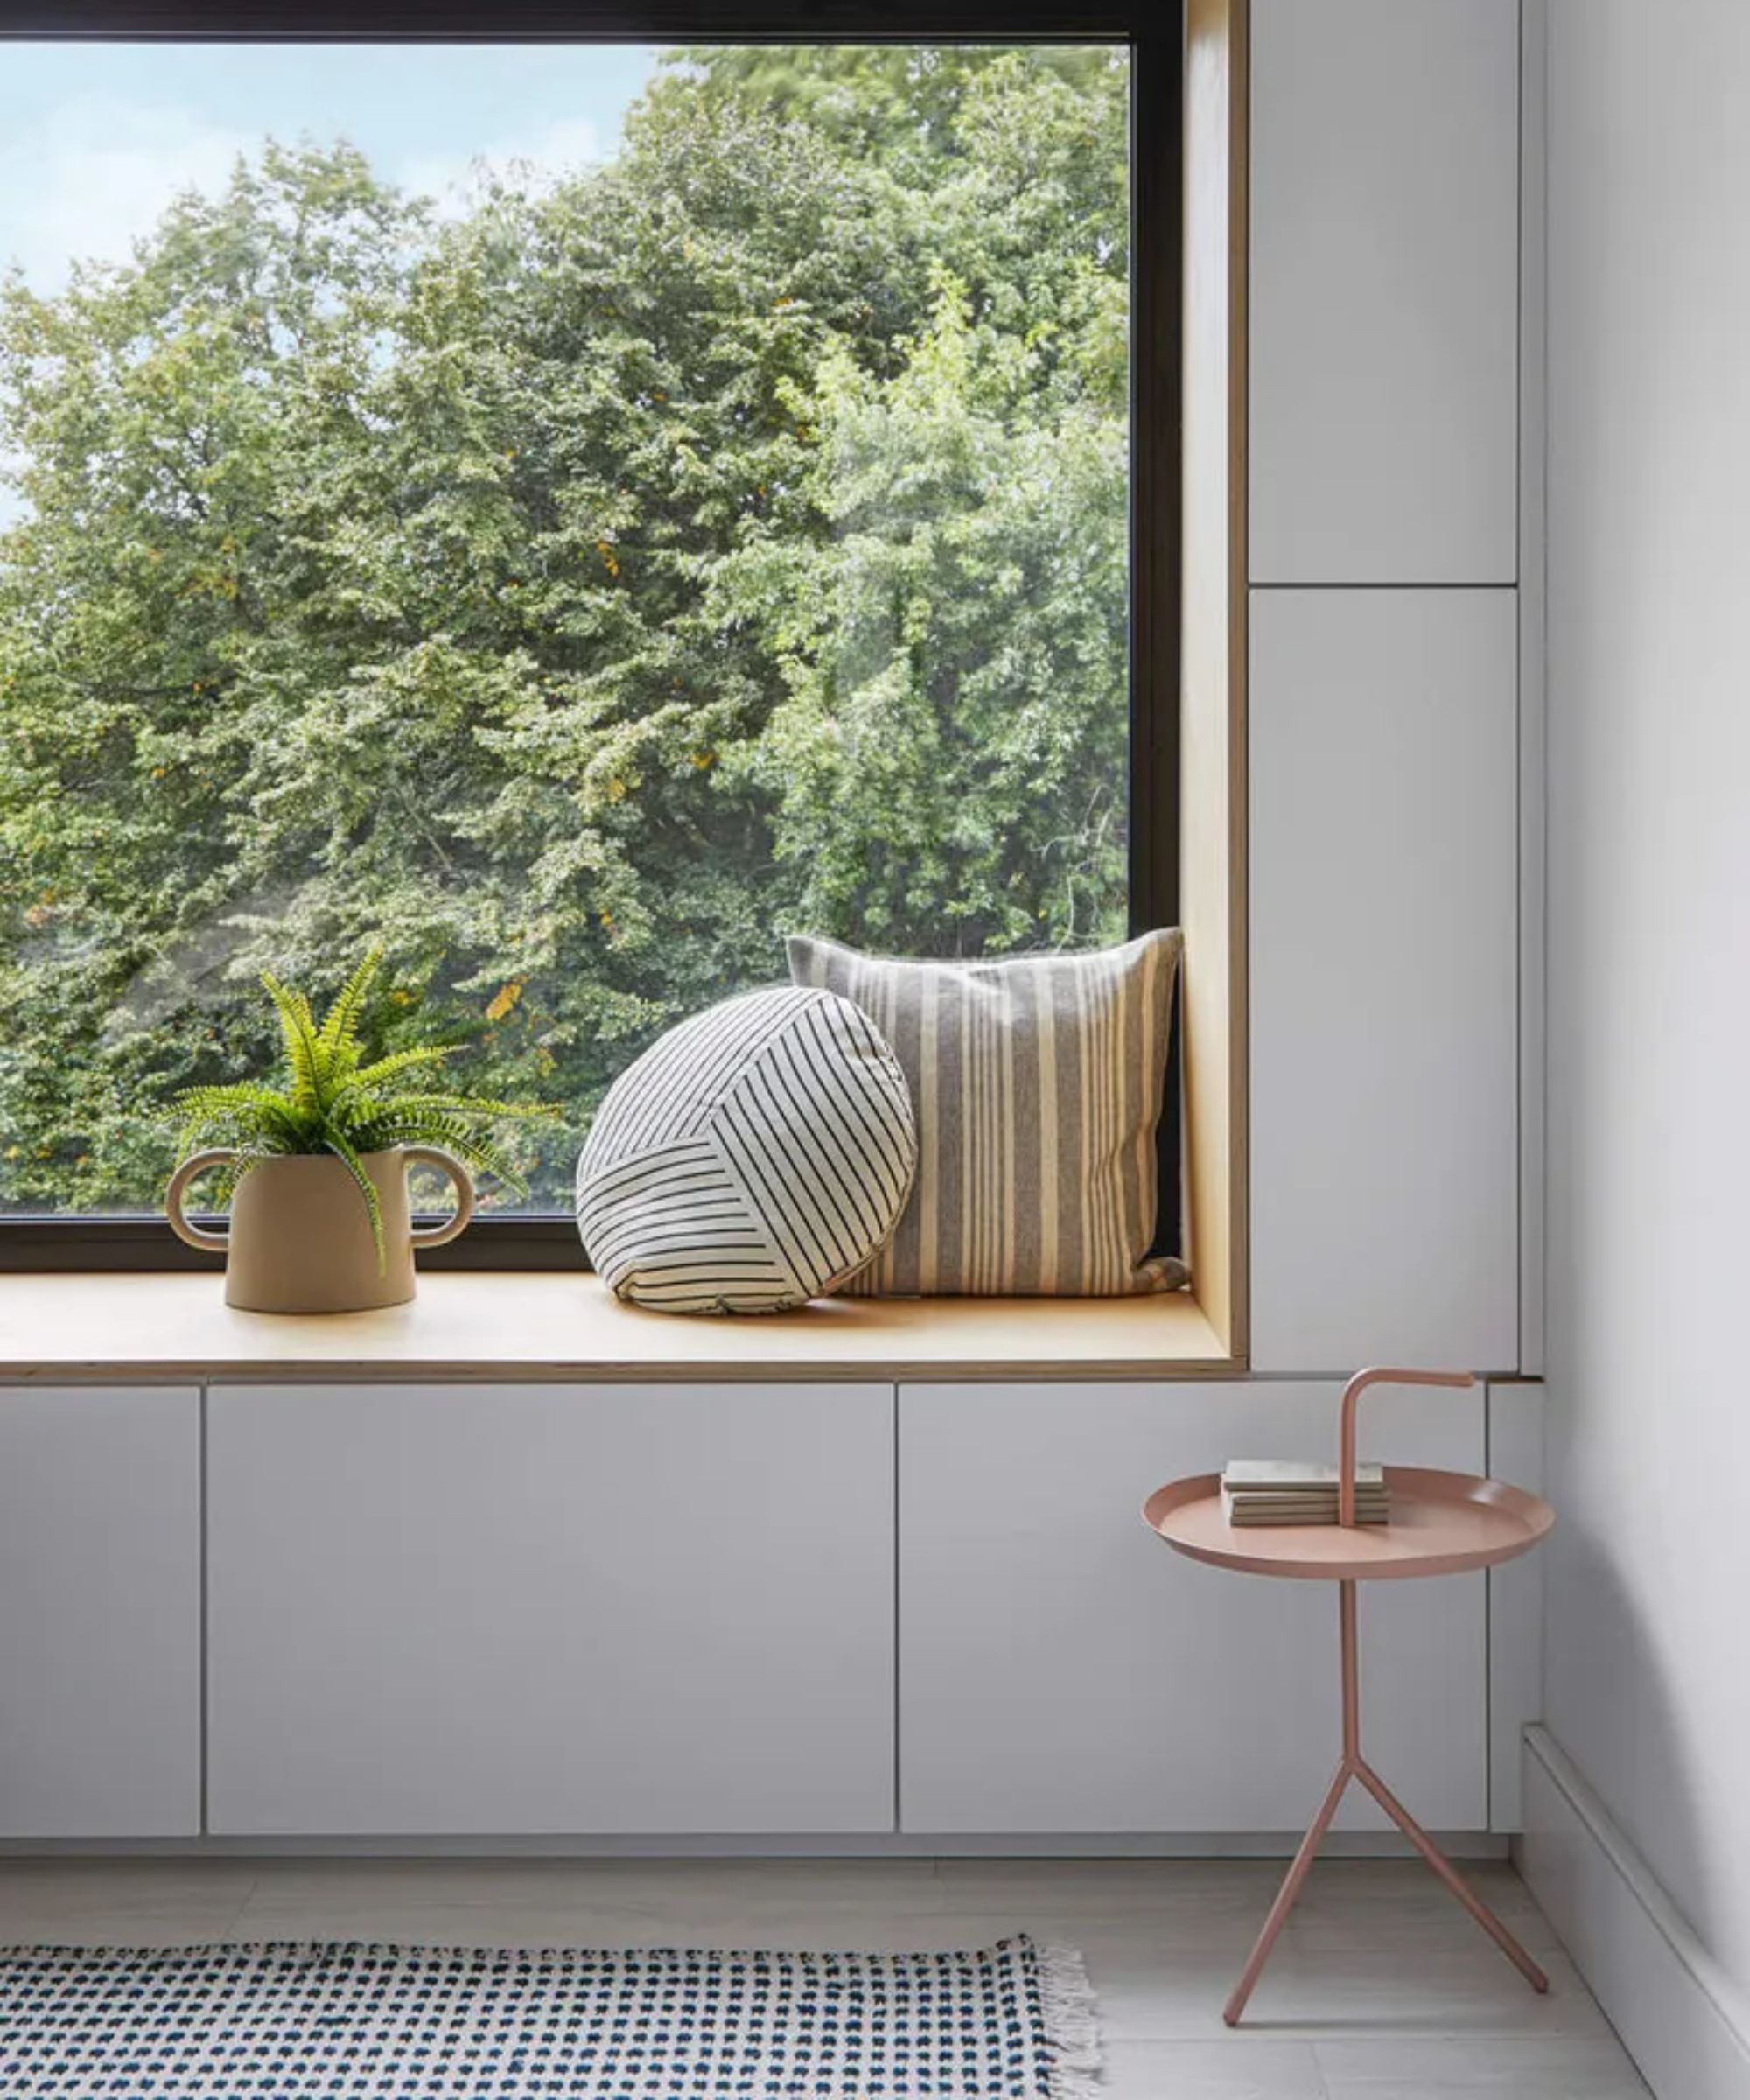 White cabinets around window seat, cushions, indoor plant